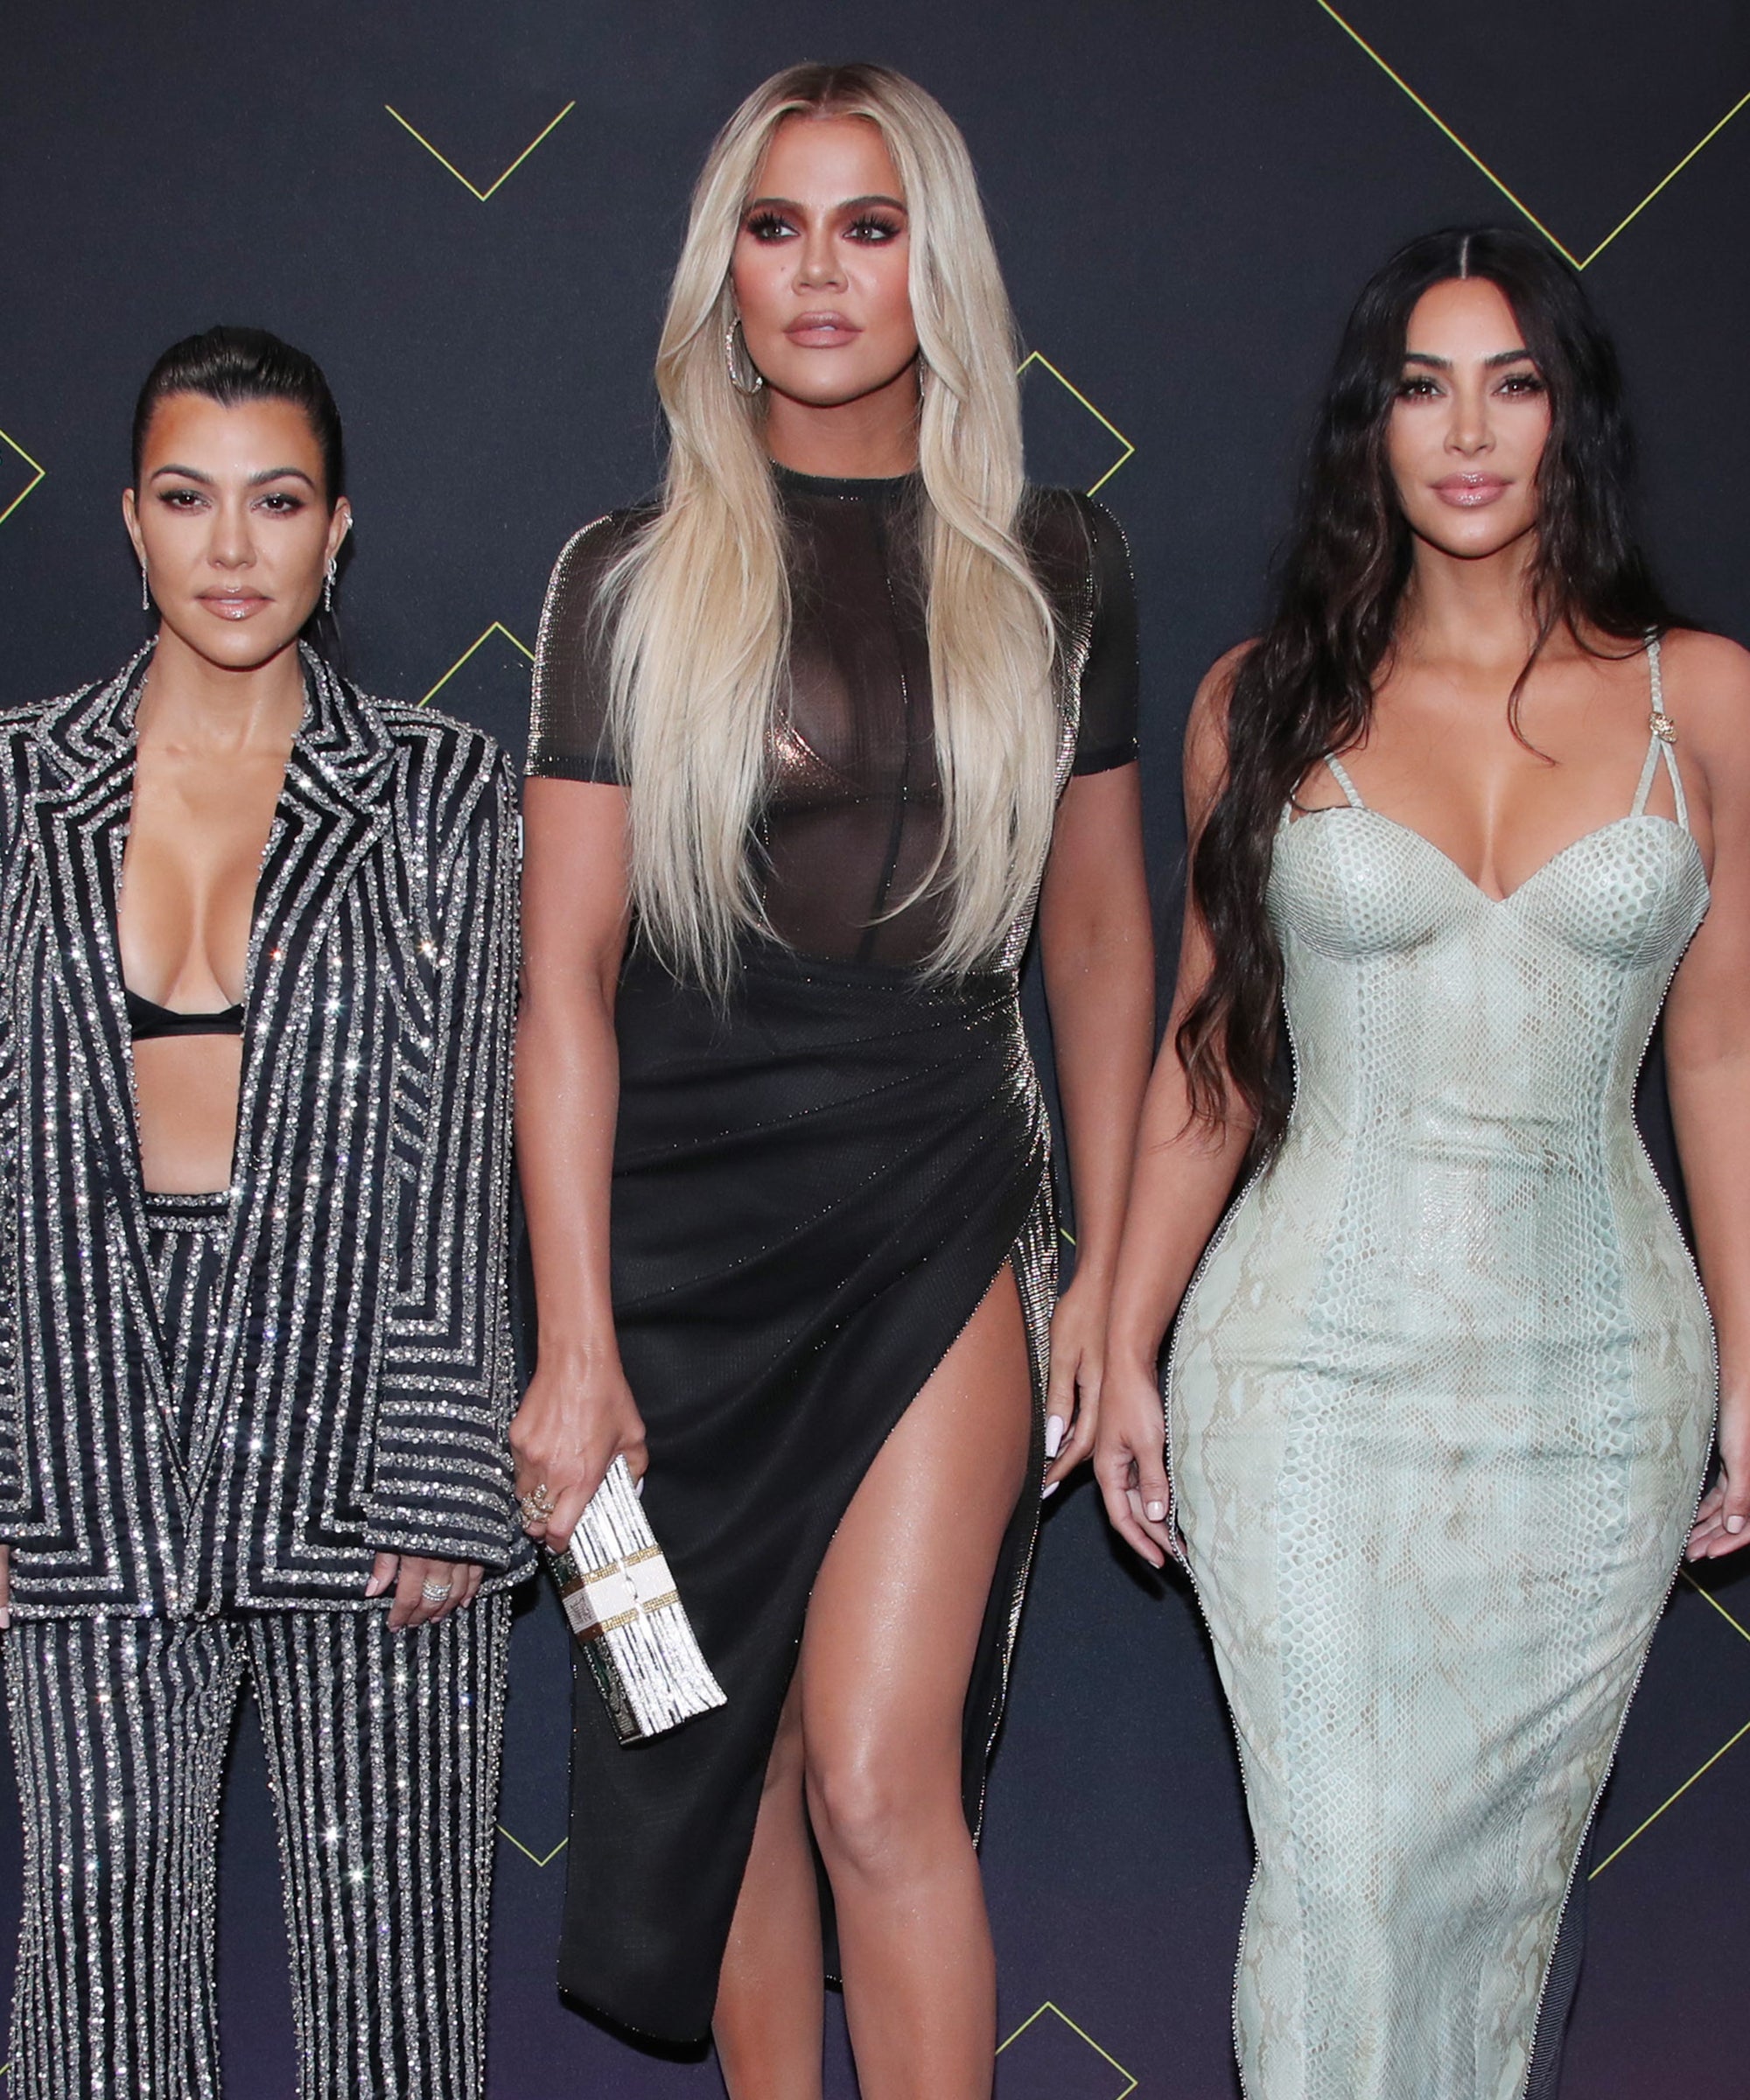 Kim Kardashian Ducking Vedios - KUWTK Kim Kardashian Free McDonalds For Being Famous